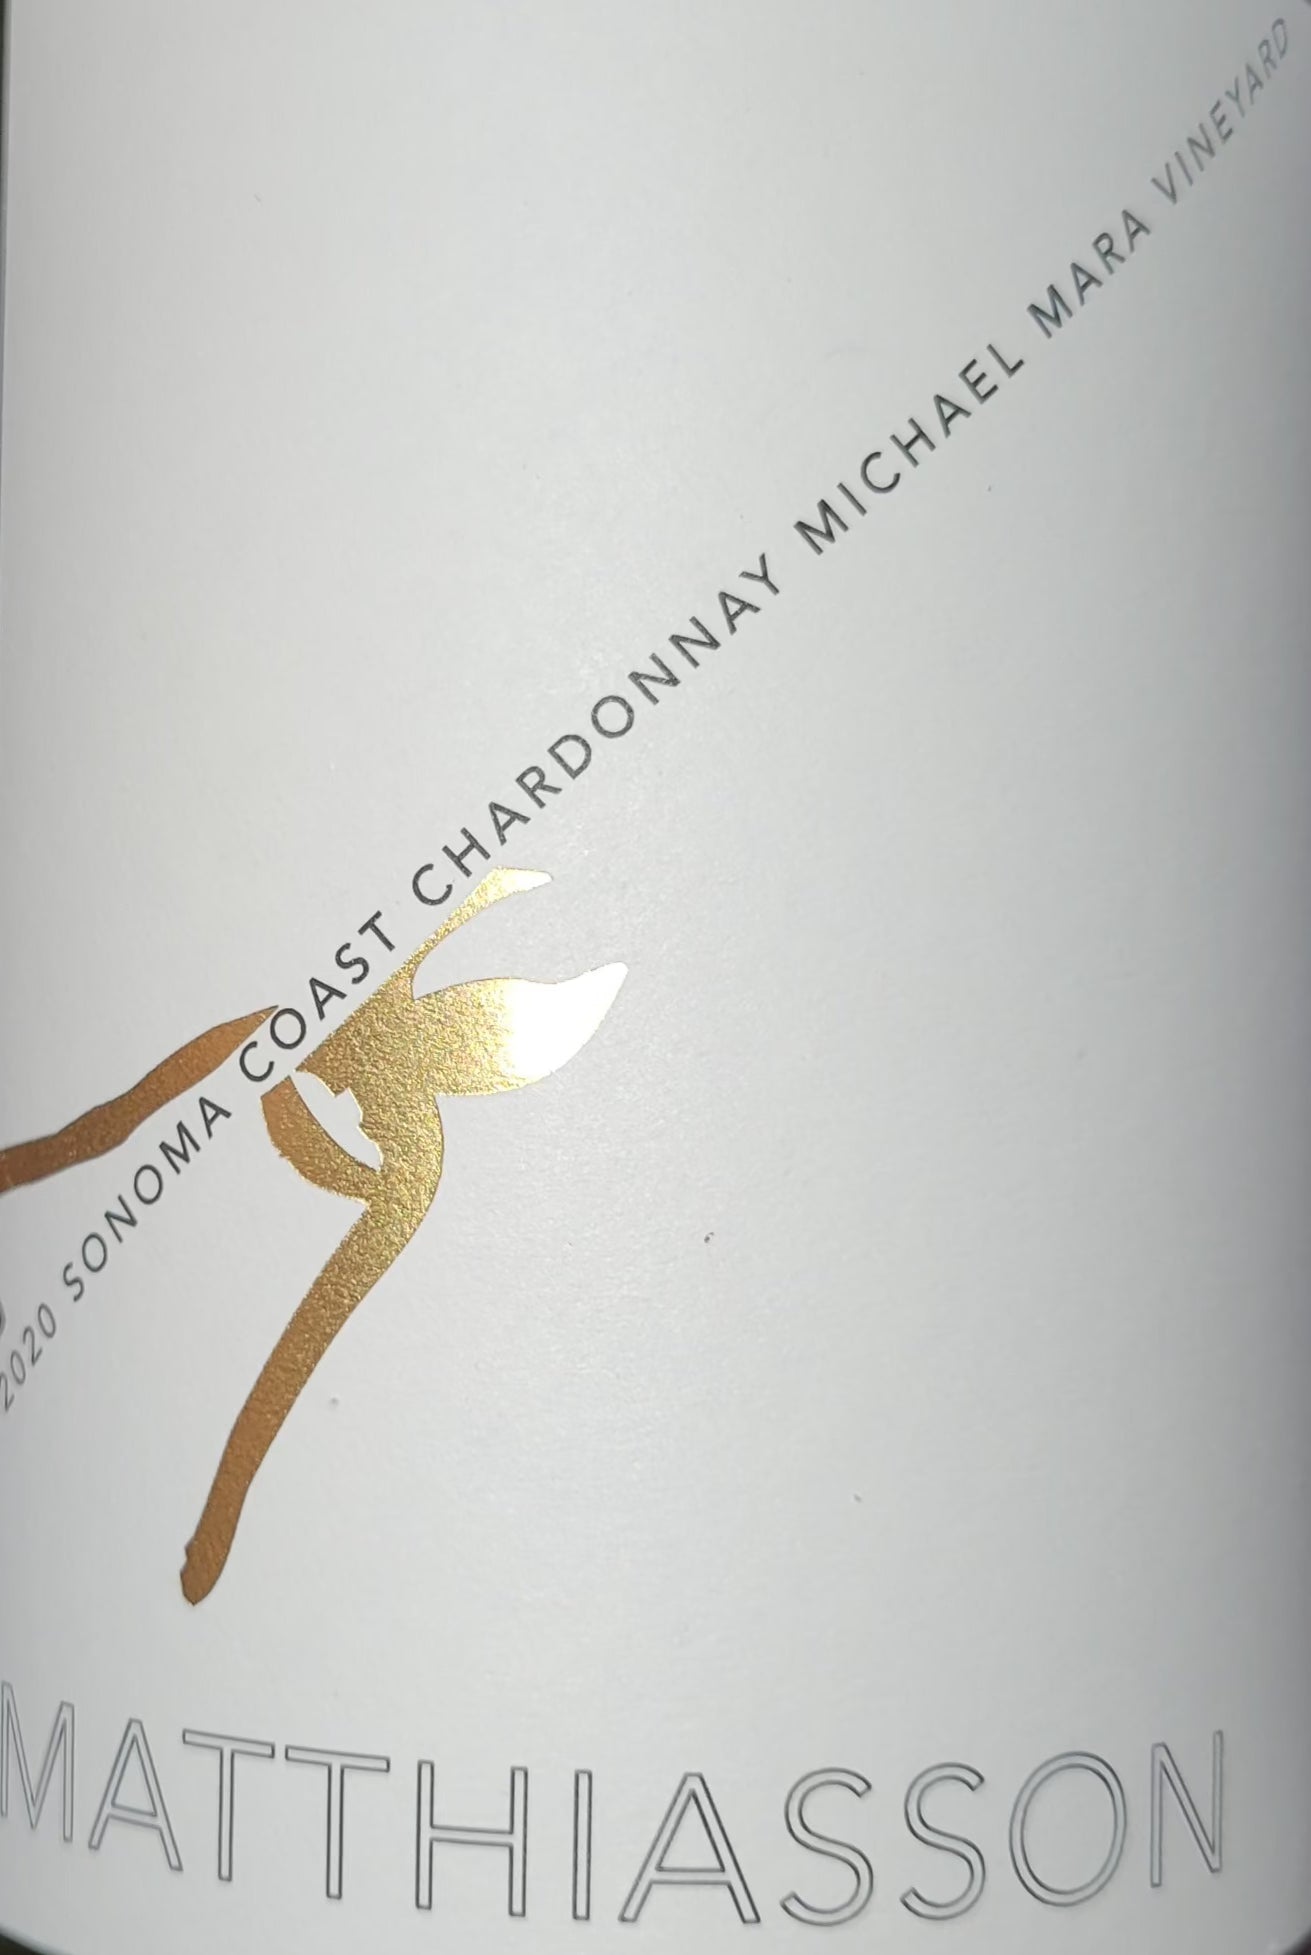 Matthiasson 'Michael Mara Vineyard' - Chardonnay